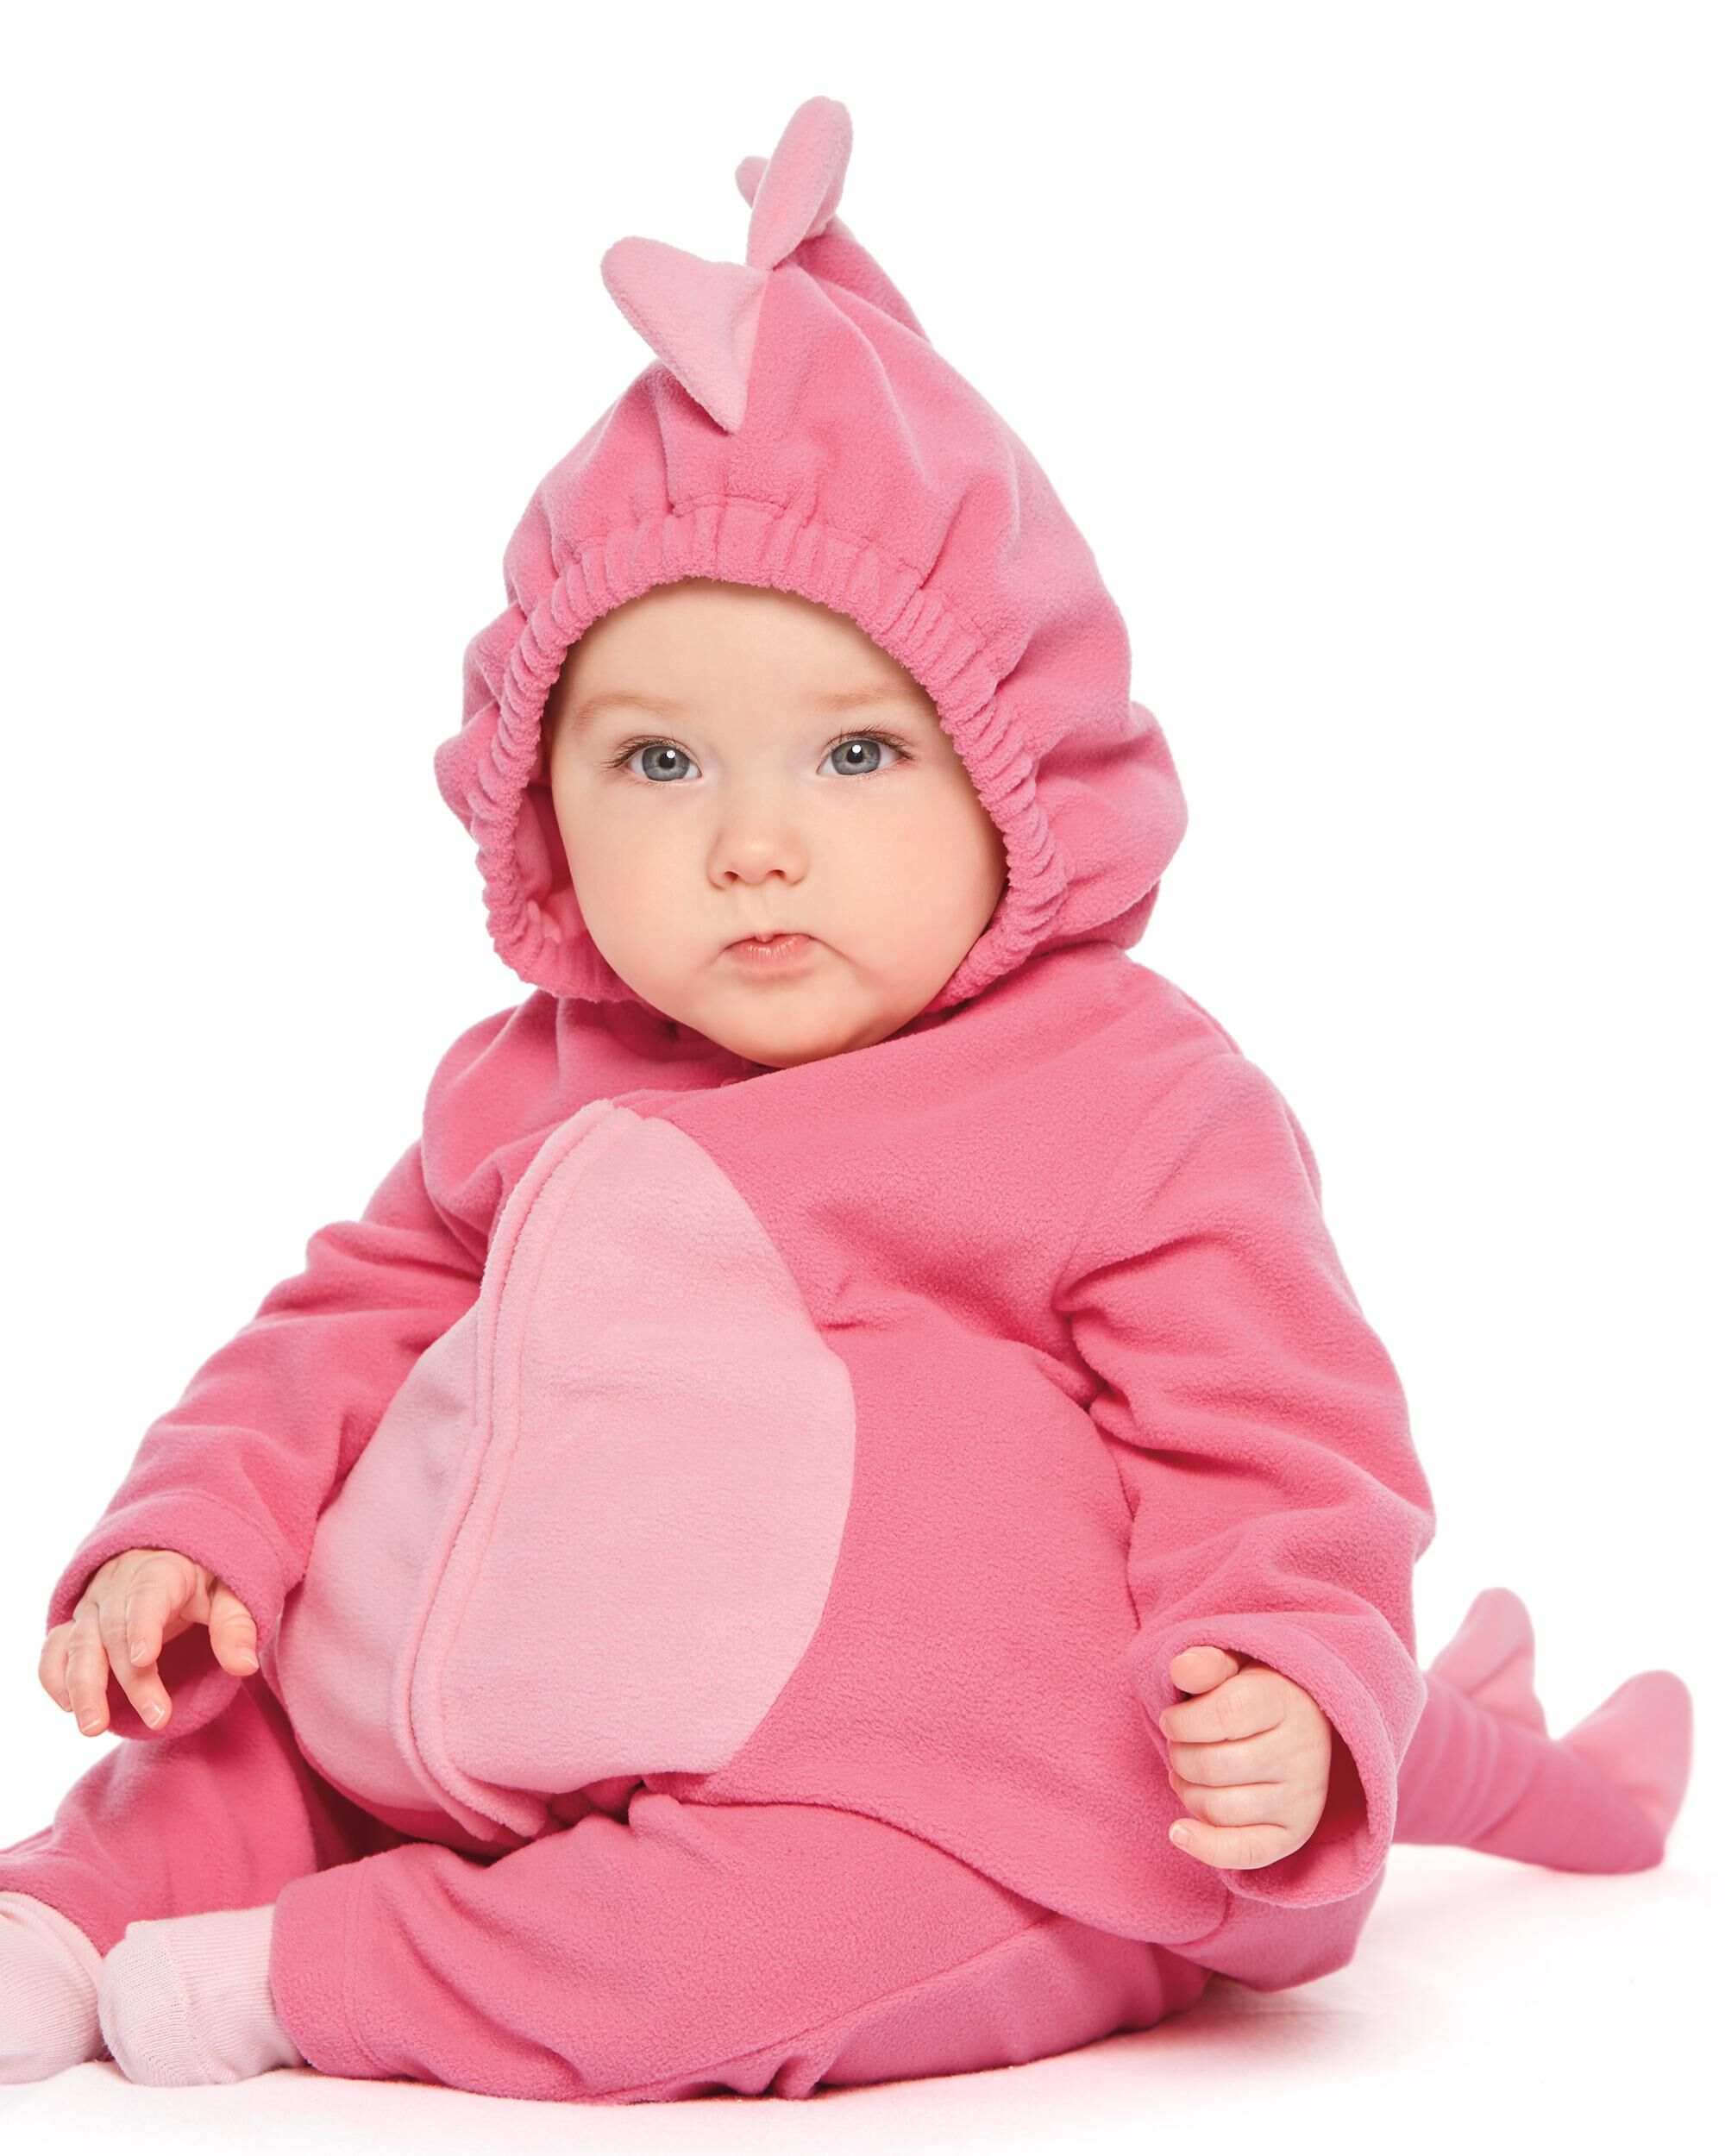 carters baby girl dinosaur clothes